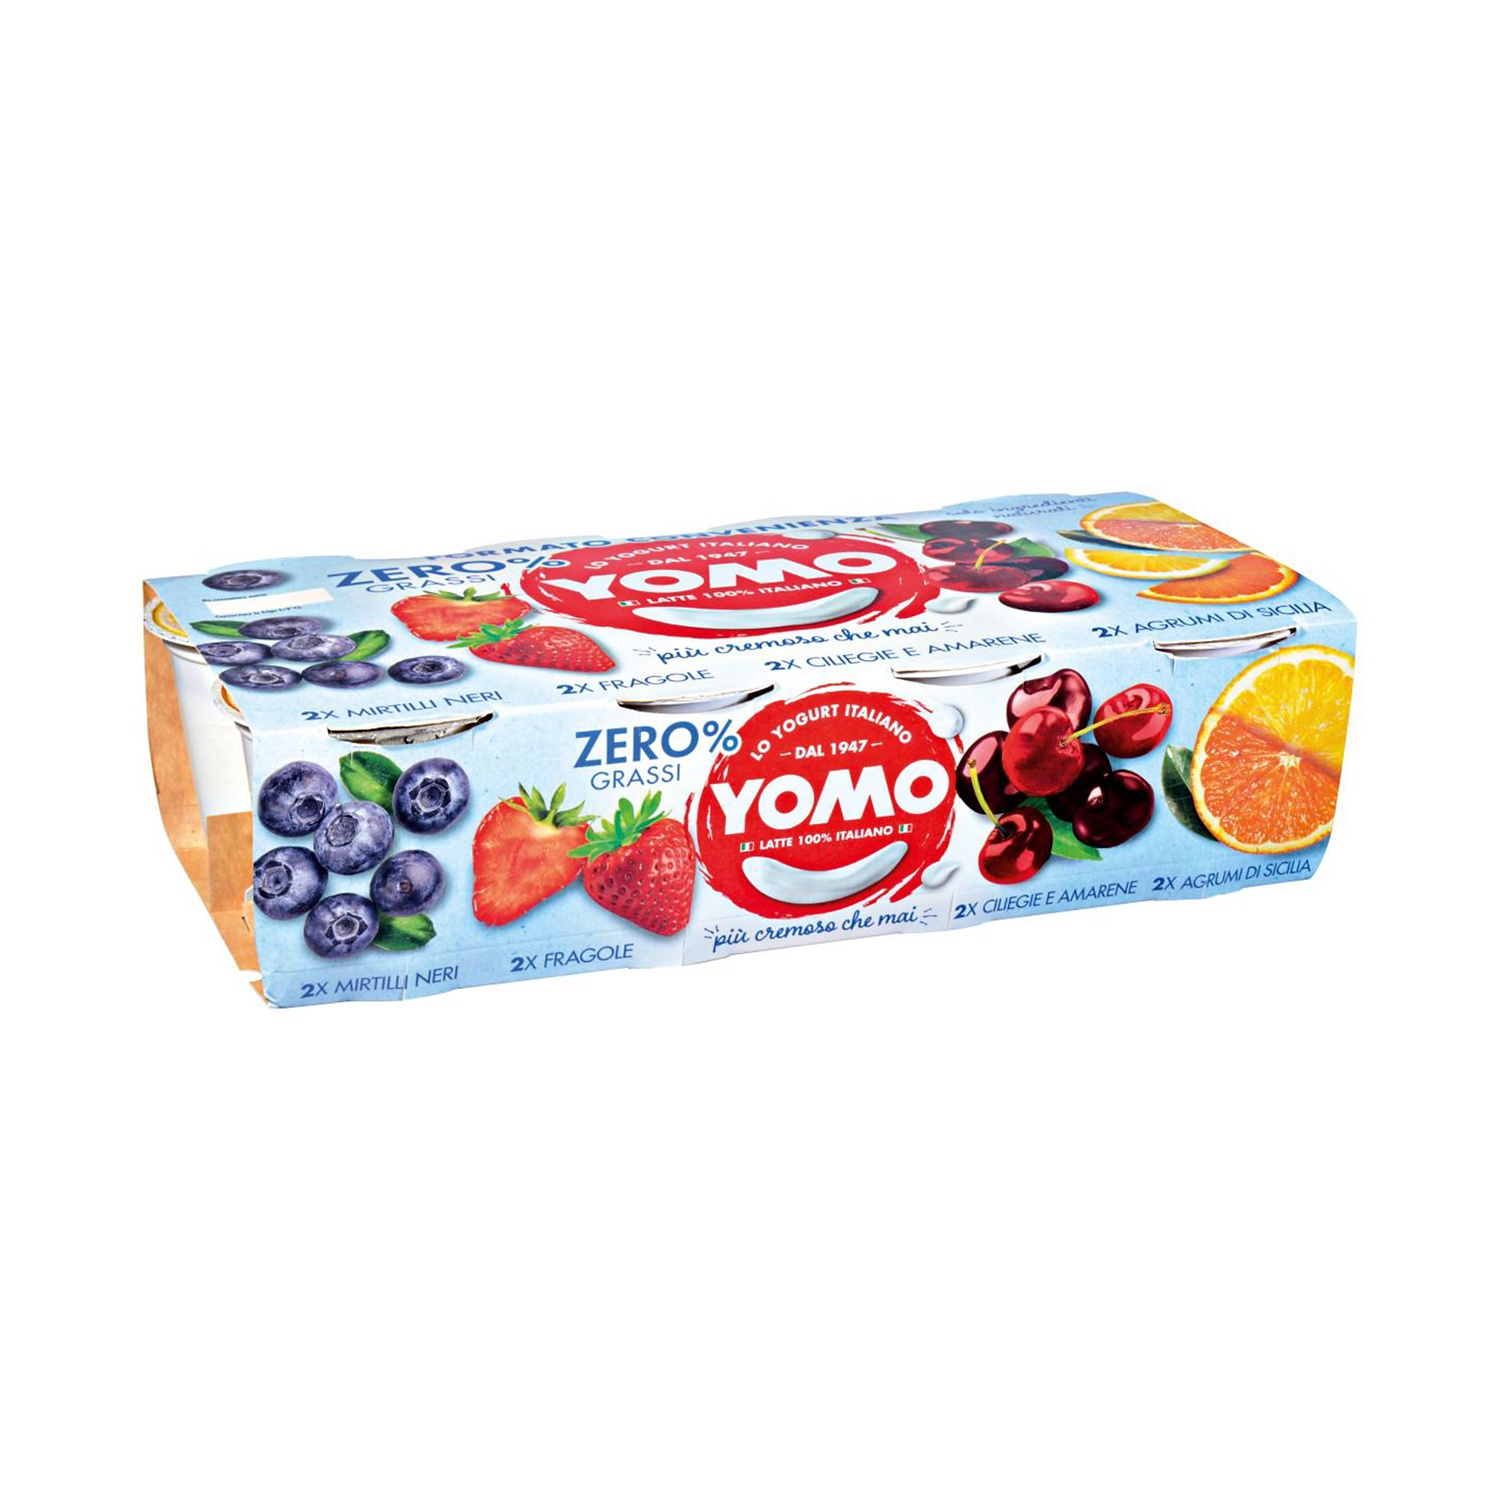 YOMO Yogurt alla frutta